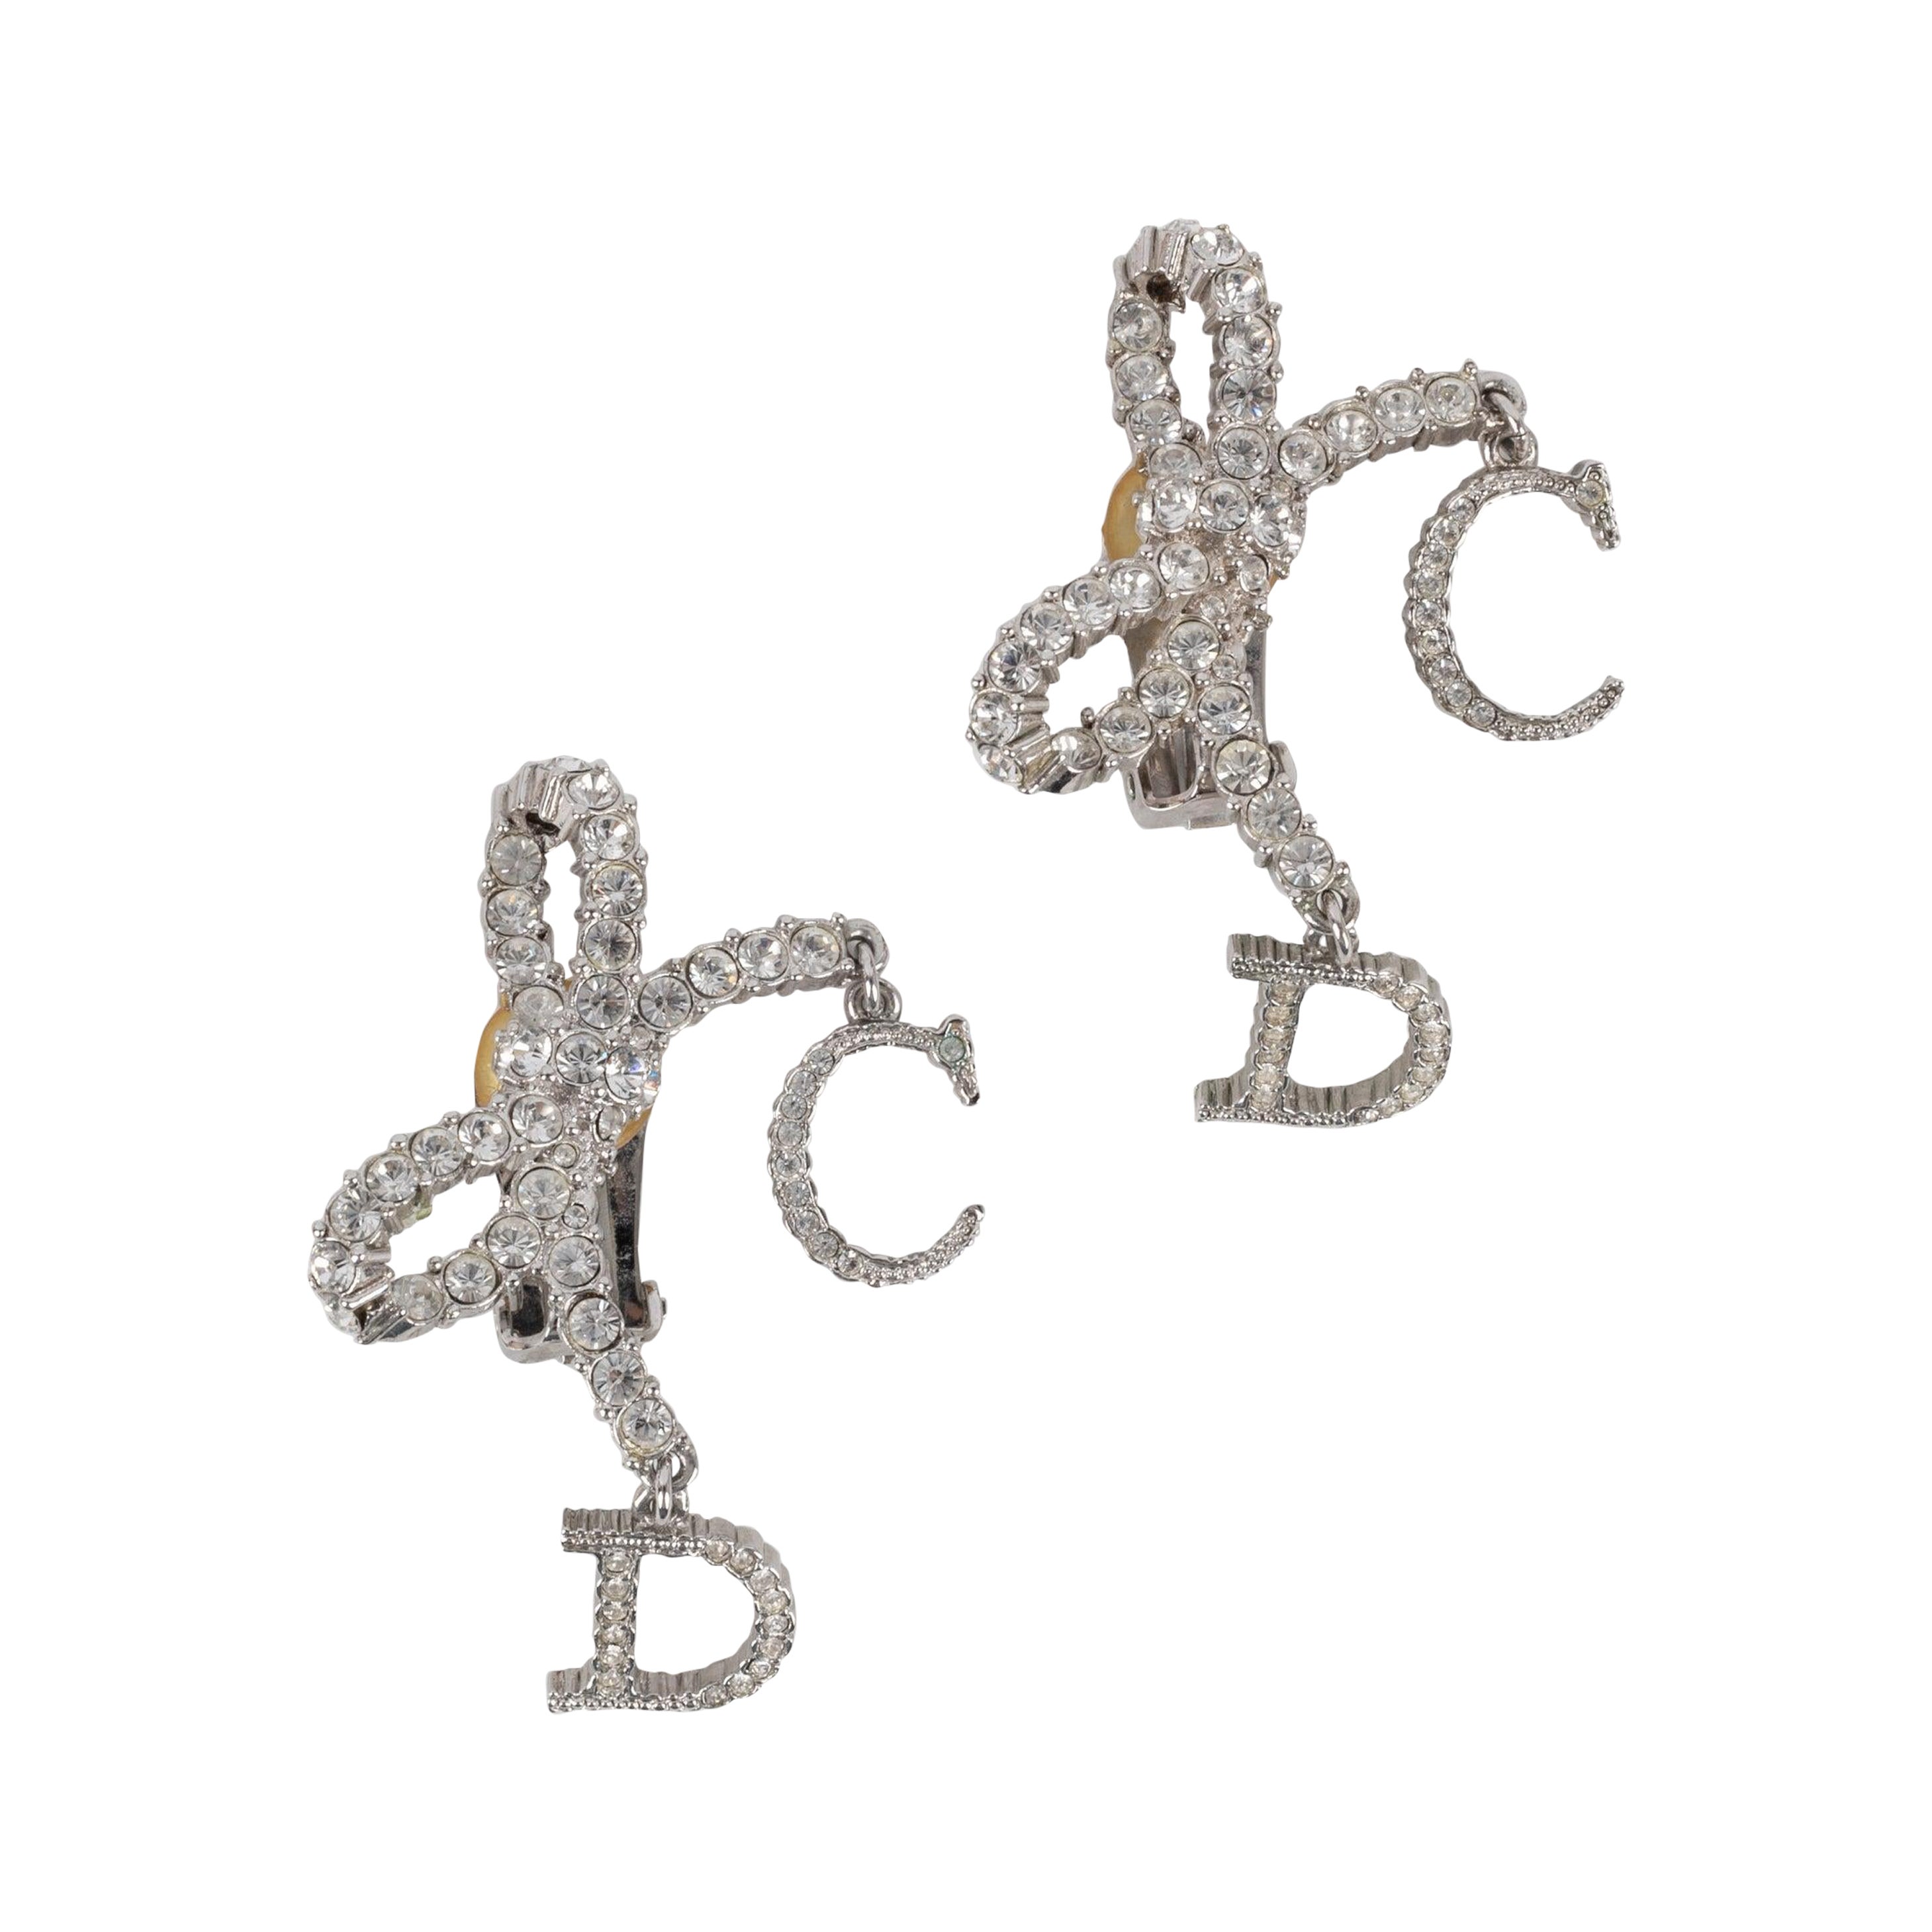 Christian Dior Silvery Metal Earrings with Swarovski Rhinestones